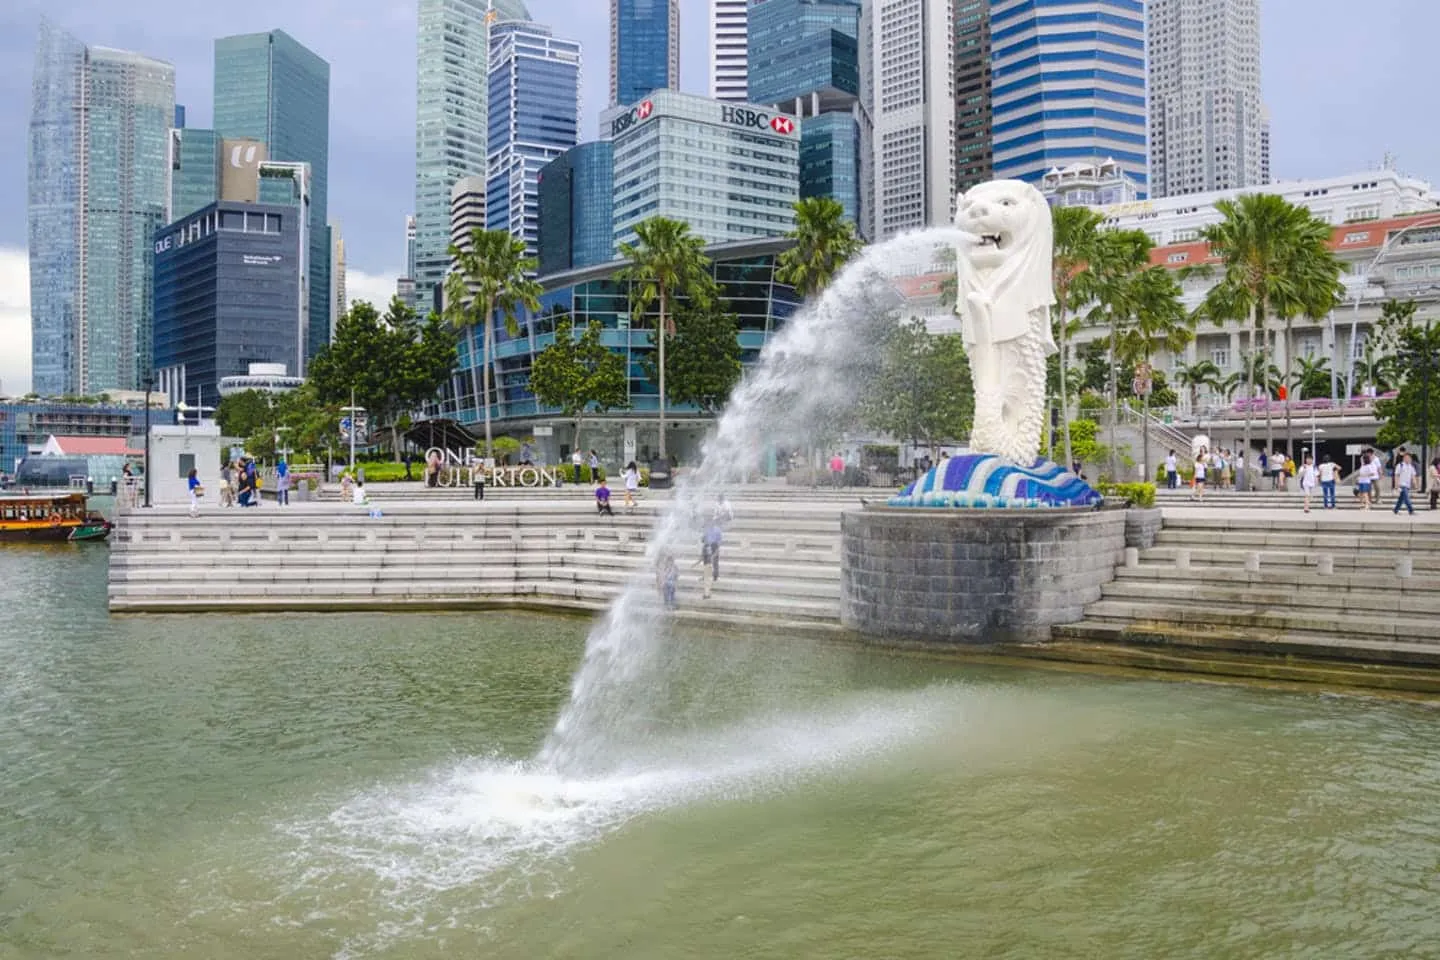 Singapor harbour fountain